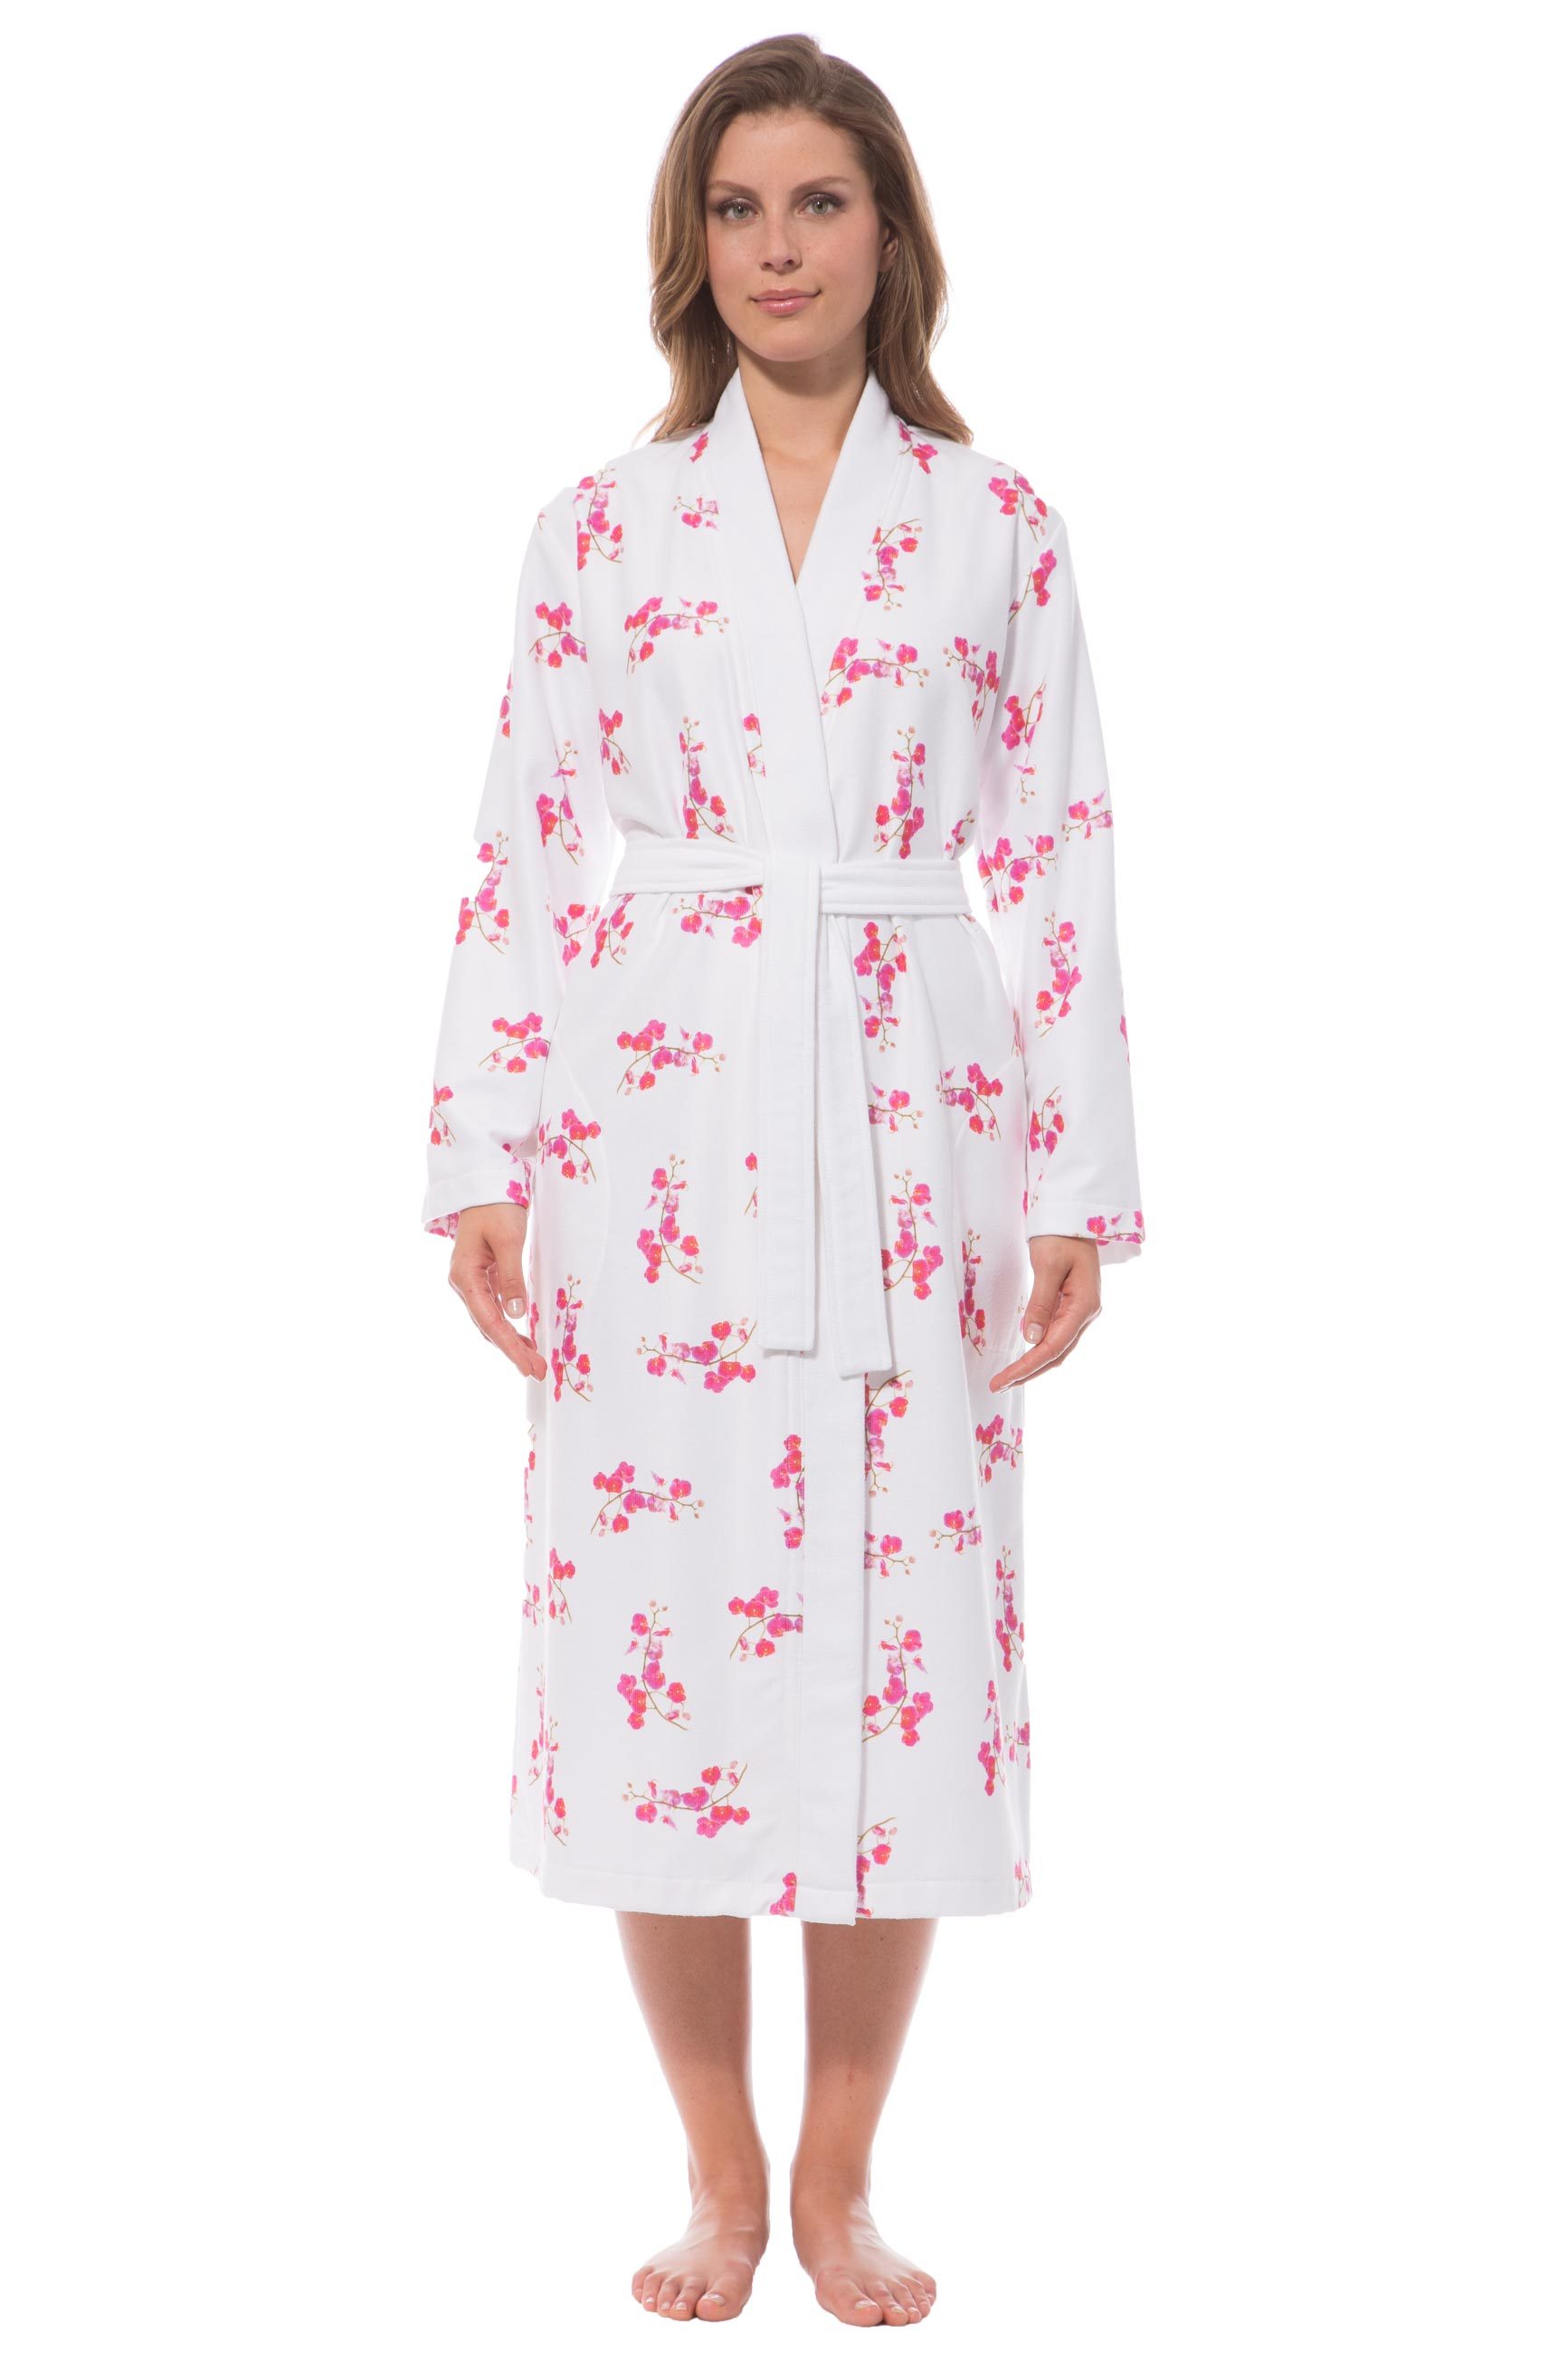 Morgenmantel Damen Kimono, Skylight leicht, Orchidee, weiß-rosa